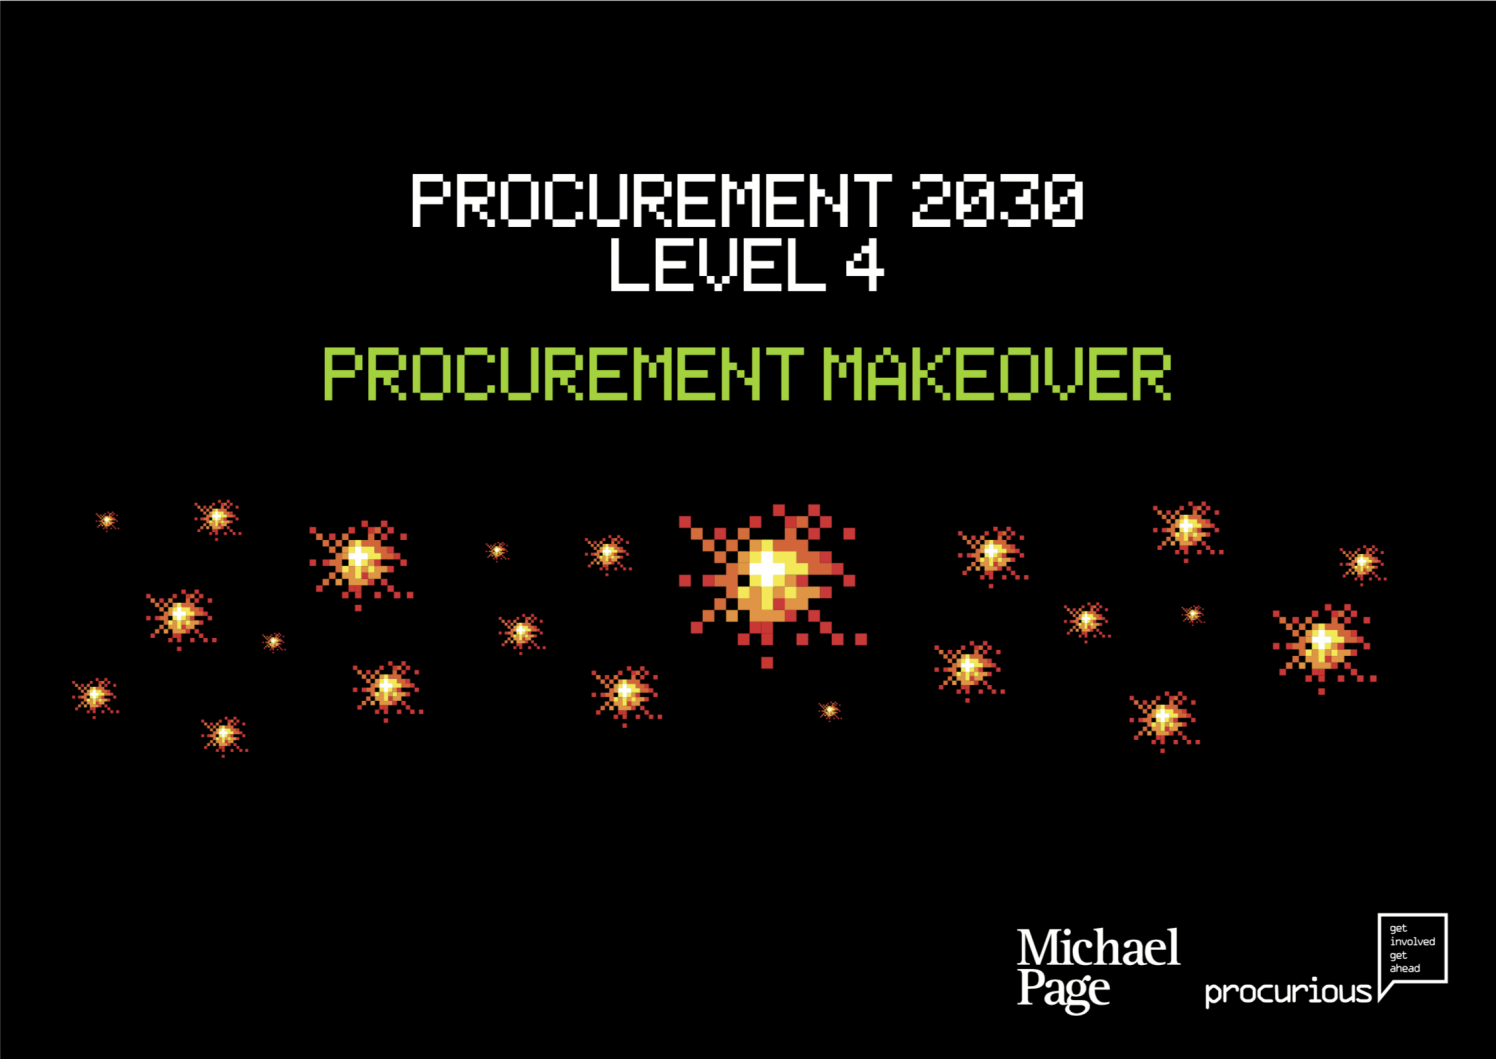 Procurement 2030 cover photo